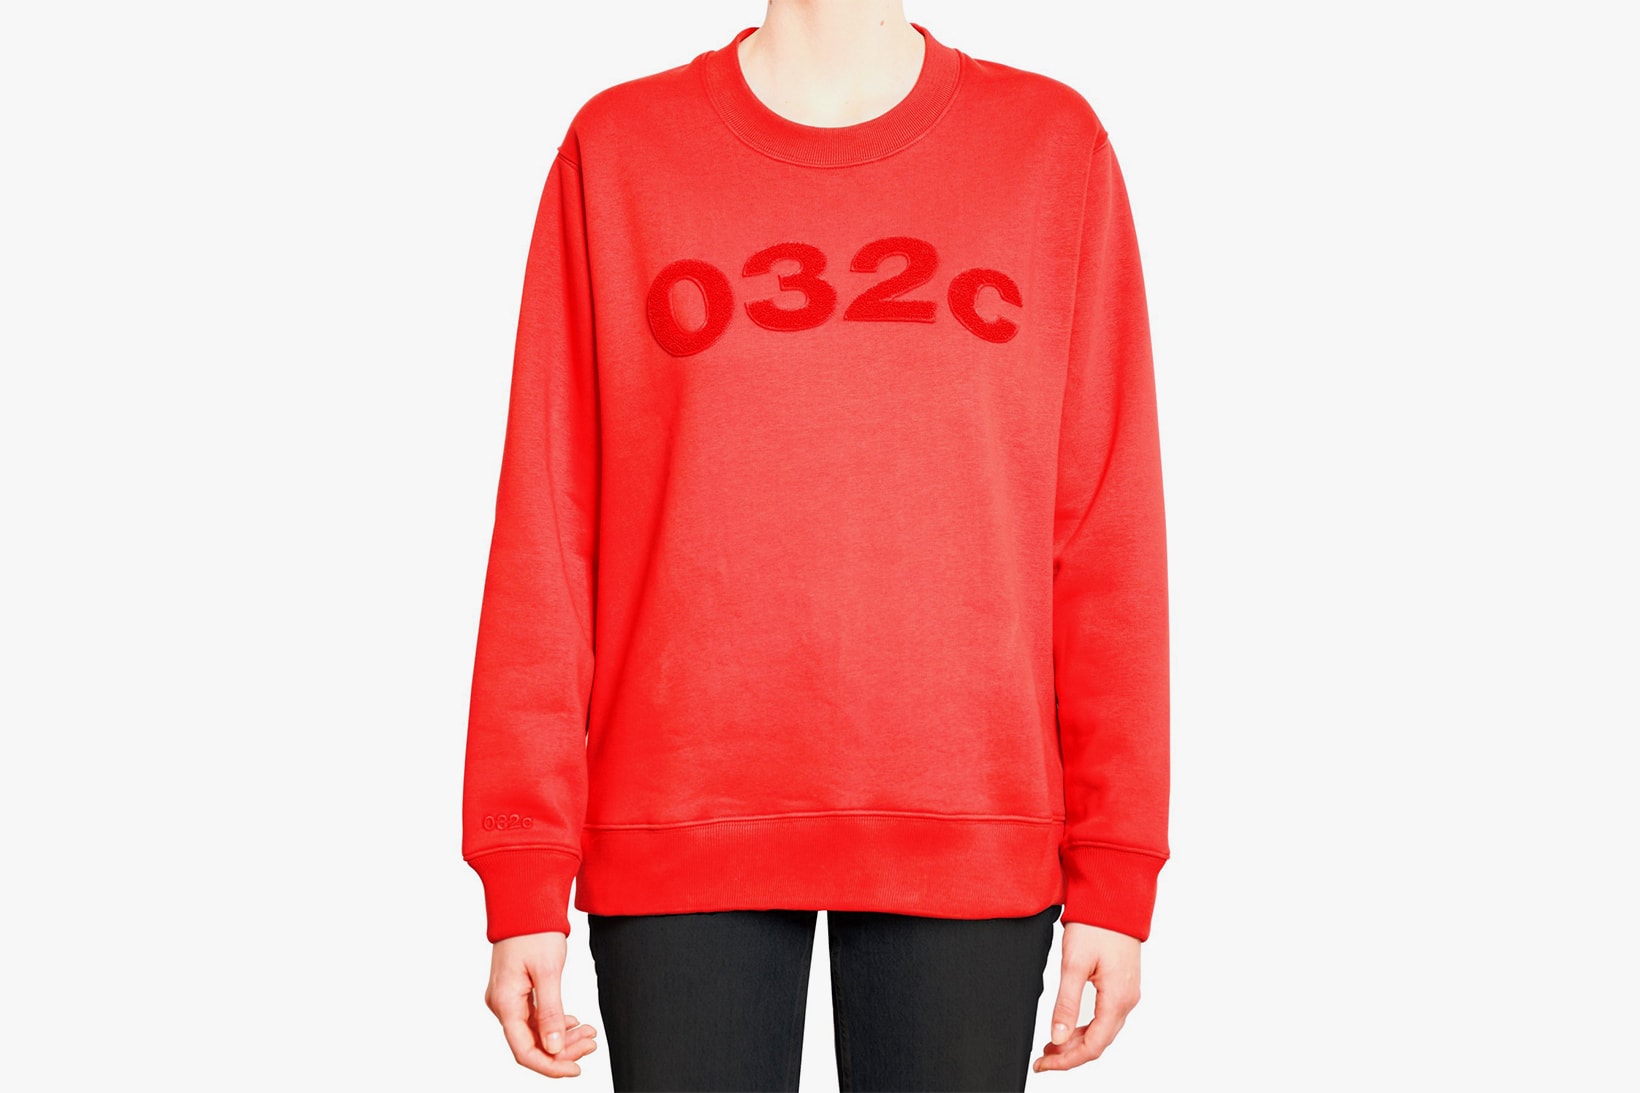 032c Believer Sweatshirt Red Crewneck Crew Neck Pull Over Pullover Fashion Tops Streetwear